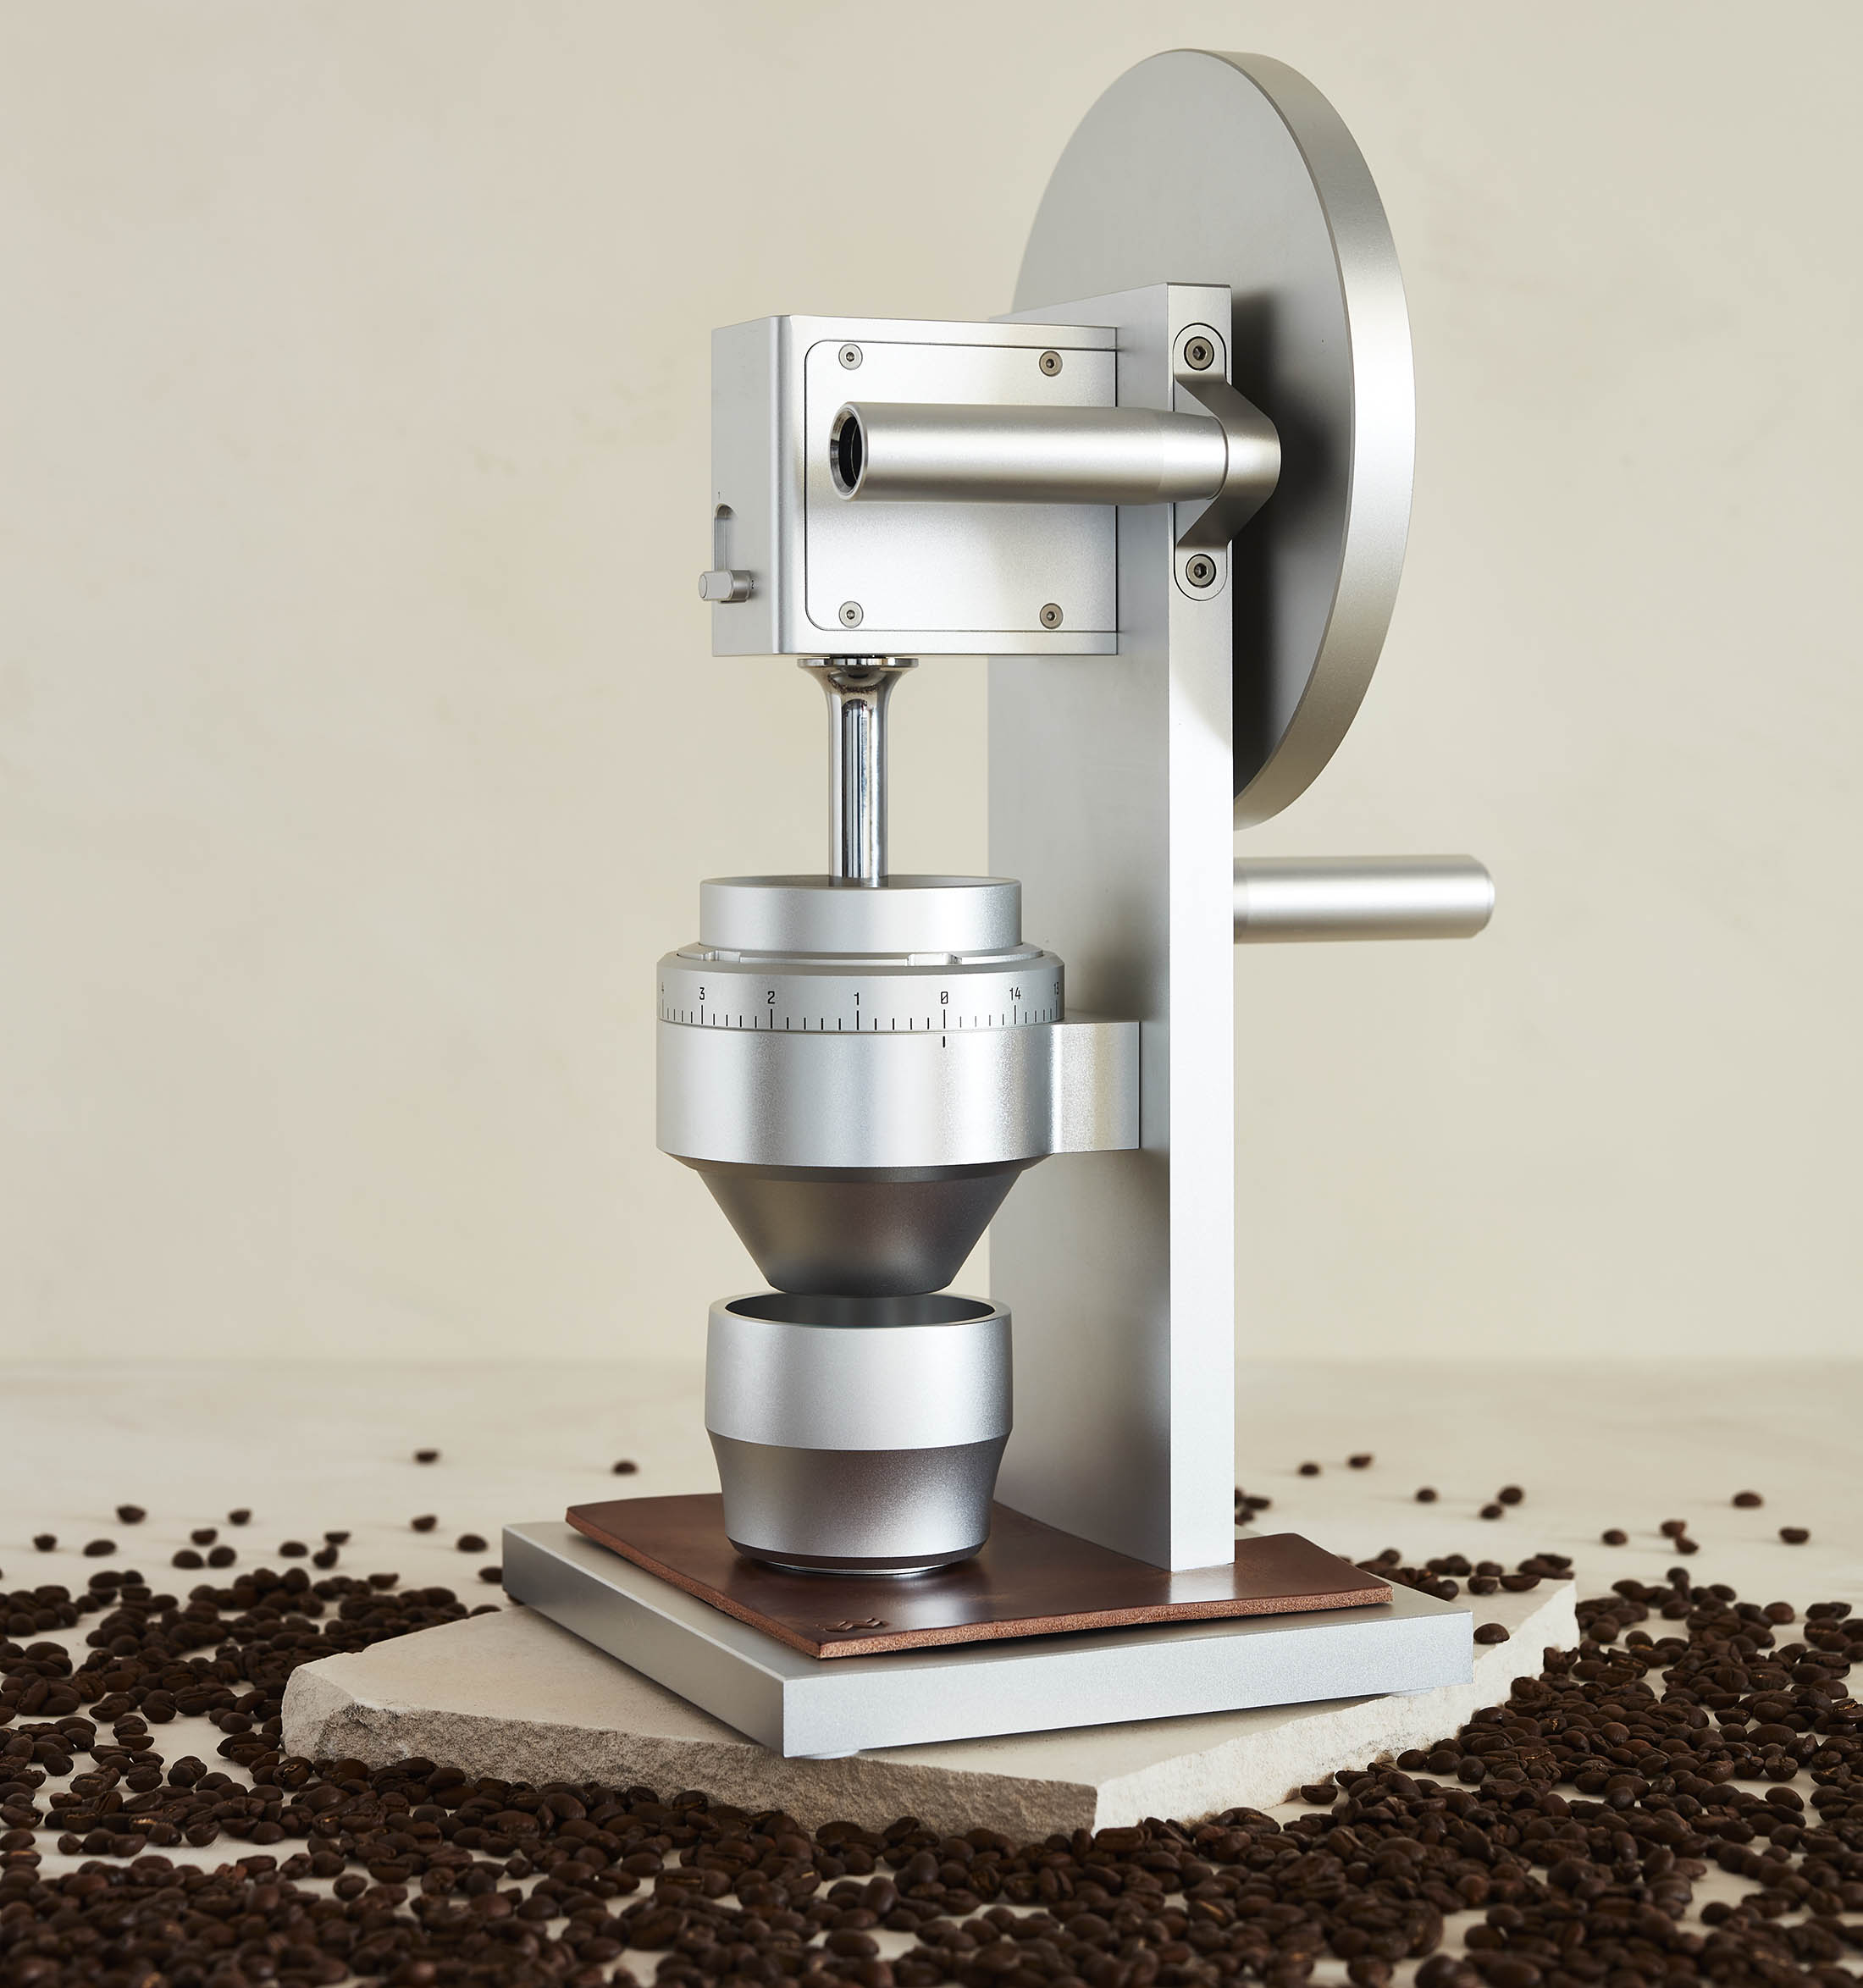 Best Manual Coffee Grinder Is Weber Workshops HG-2: Review - Bloomberg